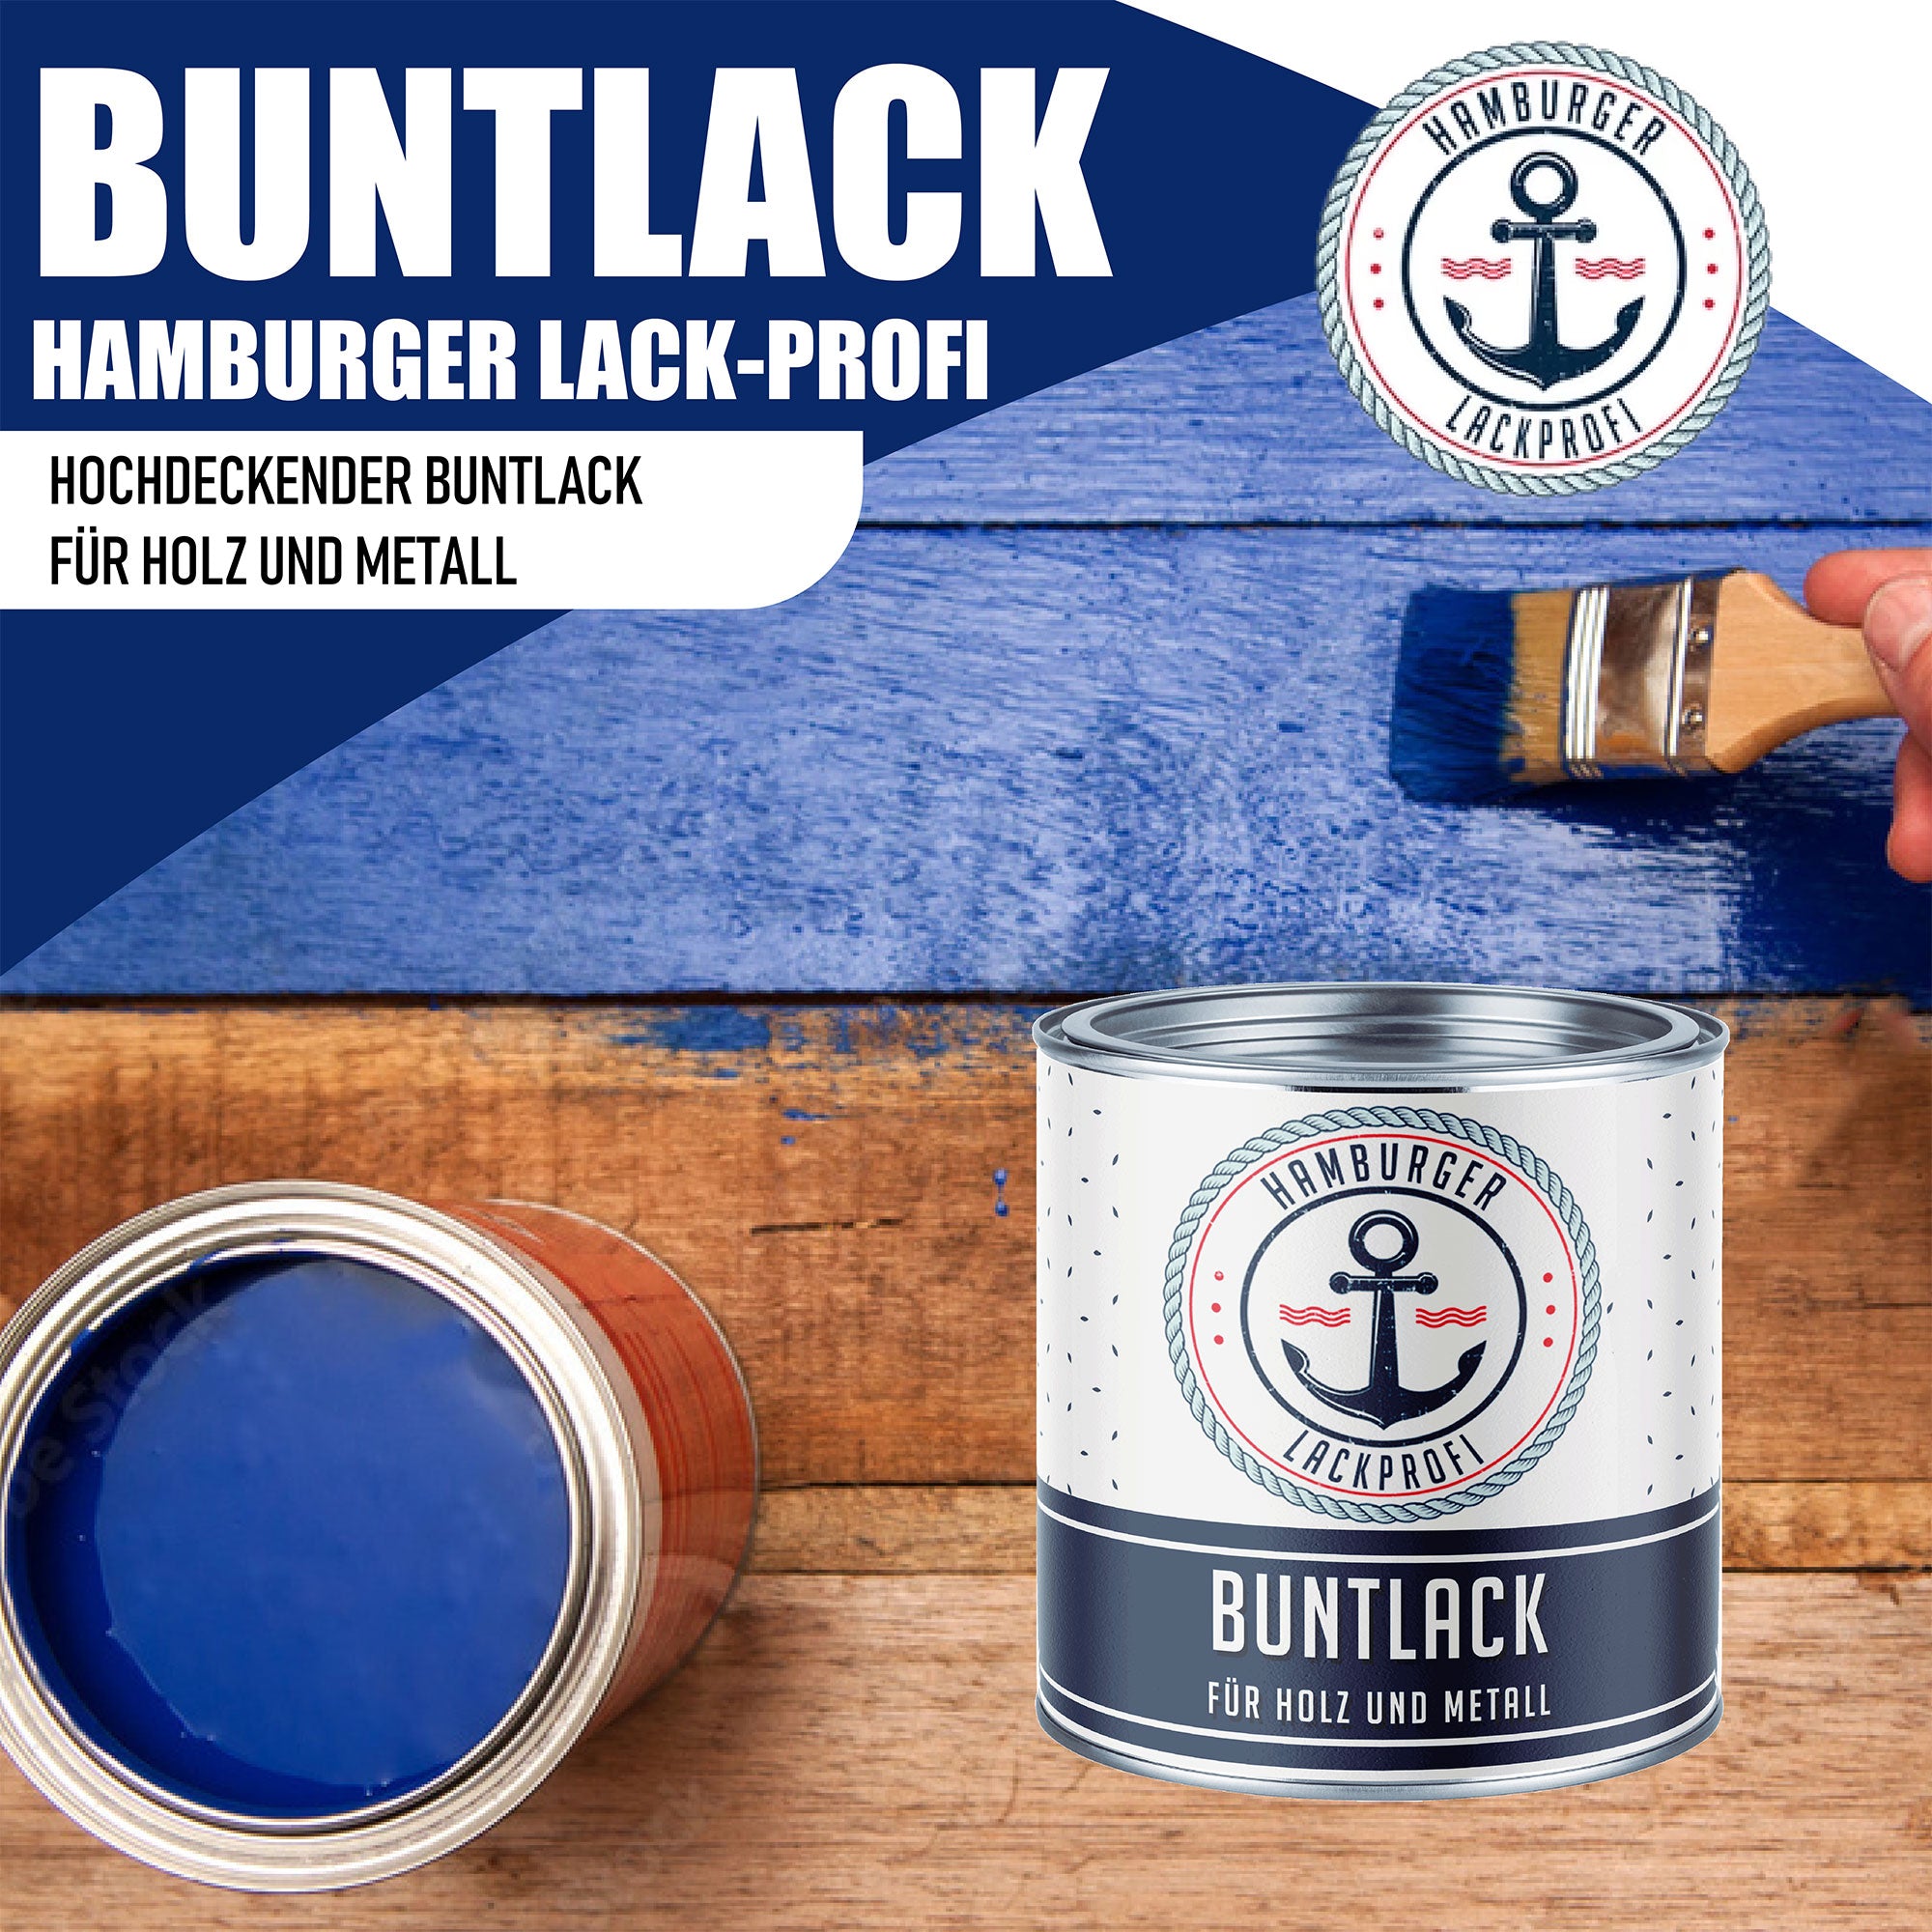 Hamburger Lack-Profi Buntlack in Karminrot RAL 3002 mit Lackierset (X300) & Verdünnung (1 L) - 30% Sparangebot